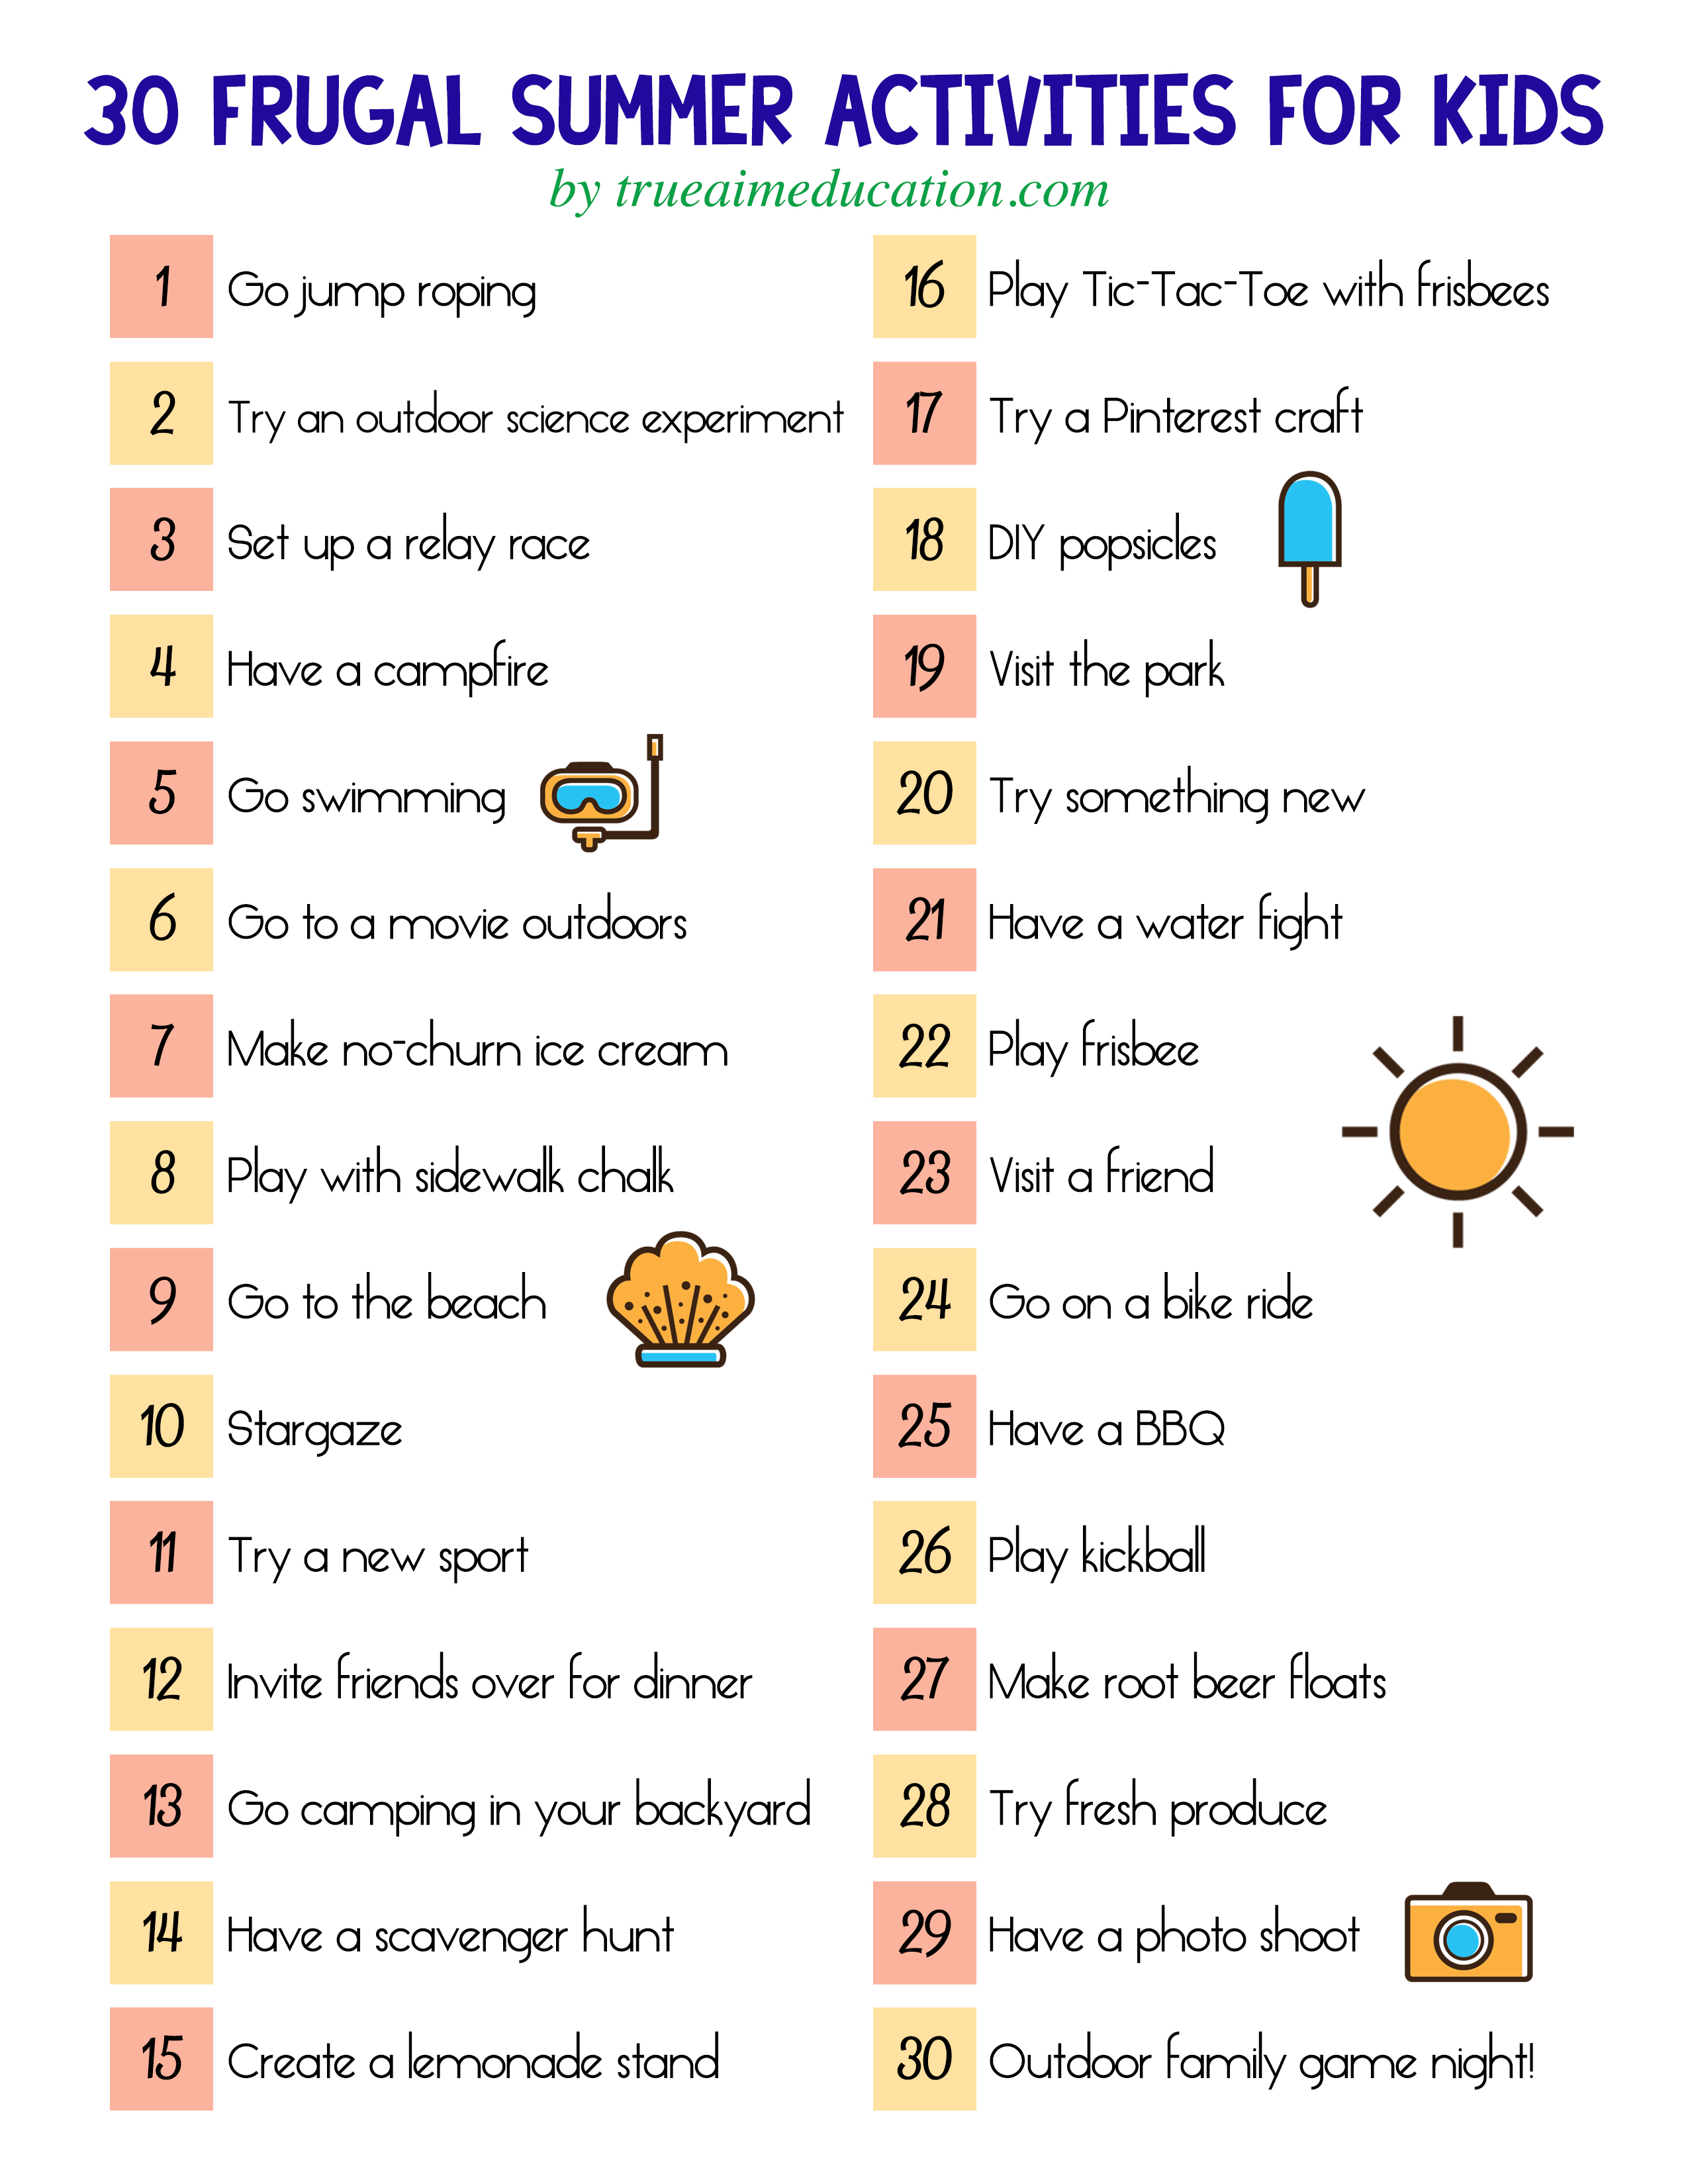 30 Frugal Summer Activities for Kids